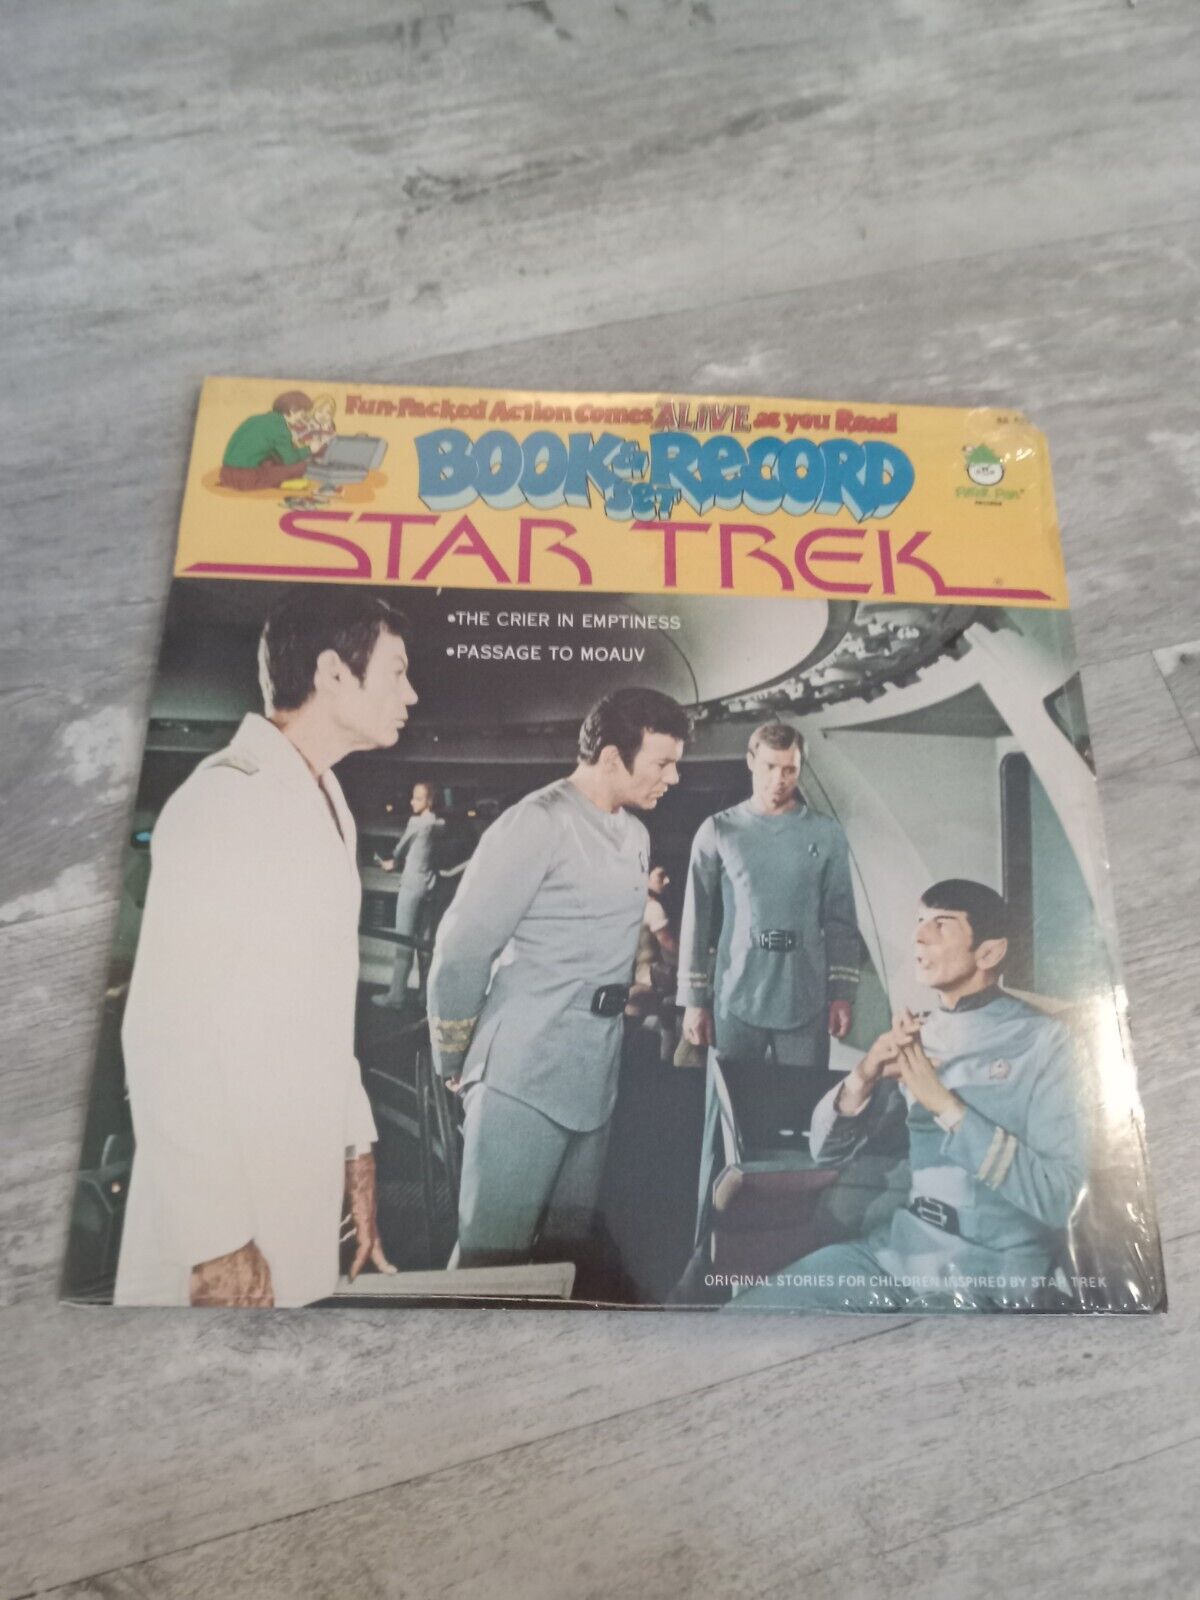 Star Trek book and record set LP vinyl 1979 VG+ BR522 Peter Pan Records